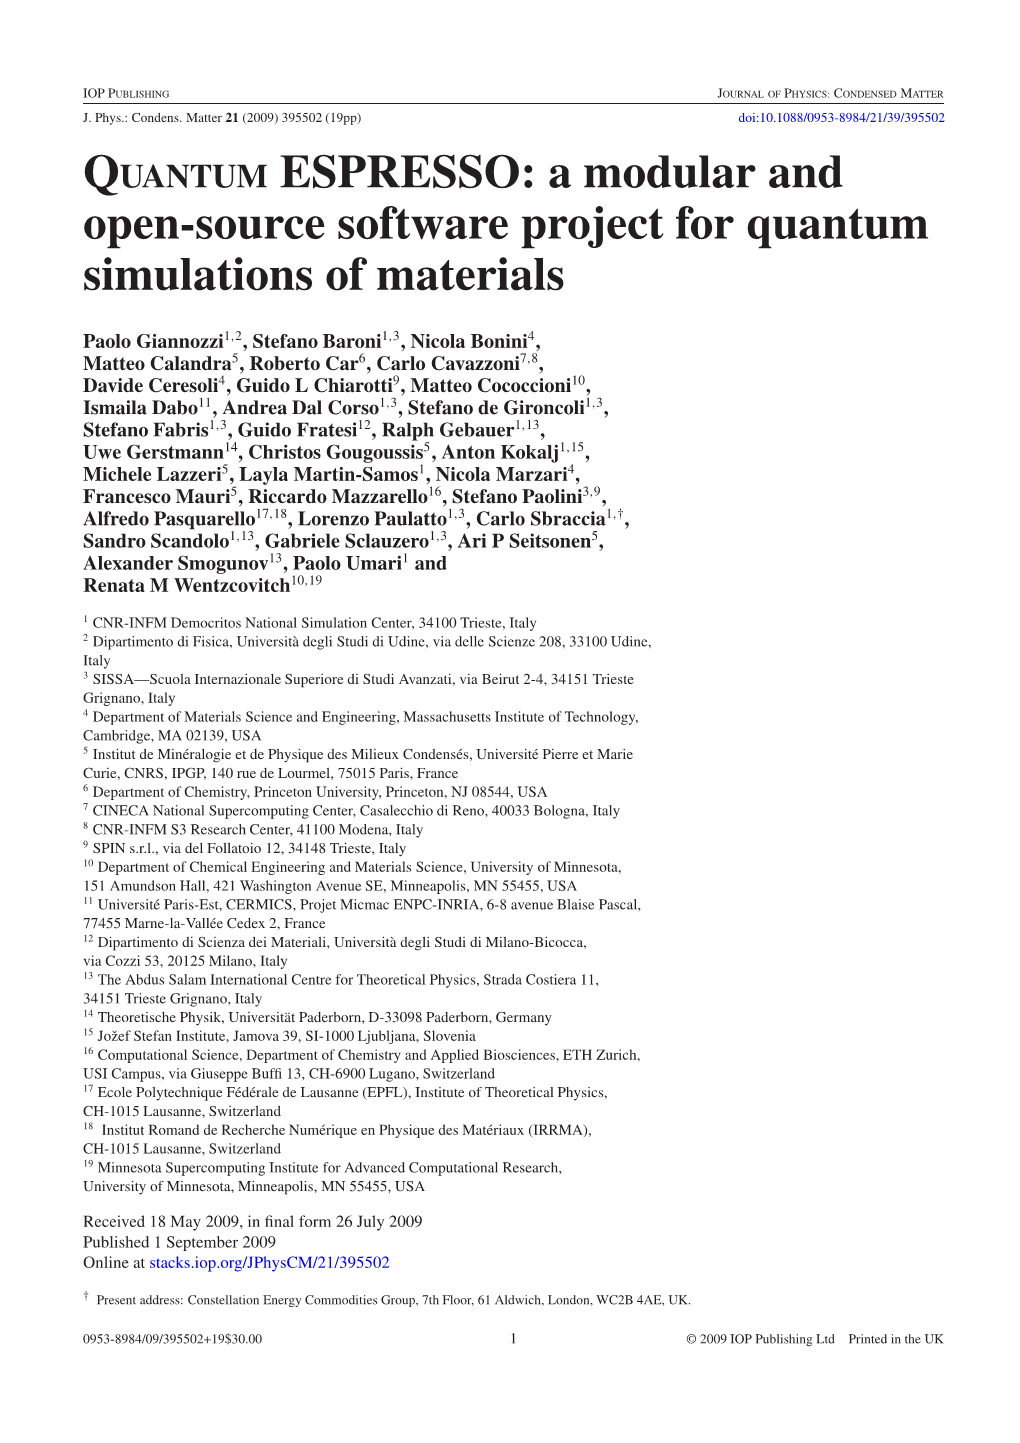 QUANTUM ESPRESSO: a Modular and Open-Source Software Project for Quantum Simulations of Materials